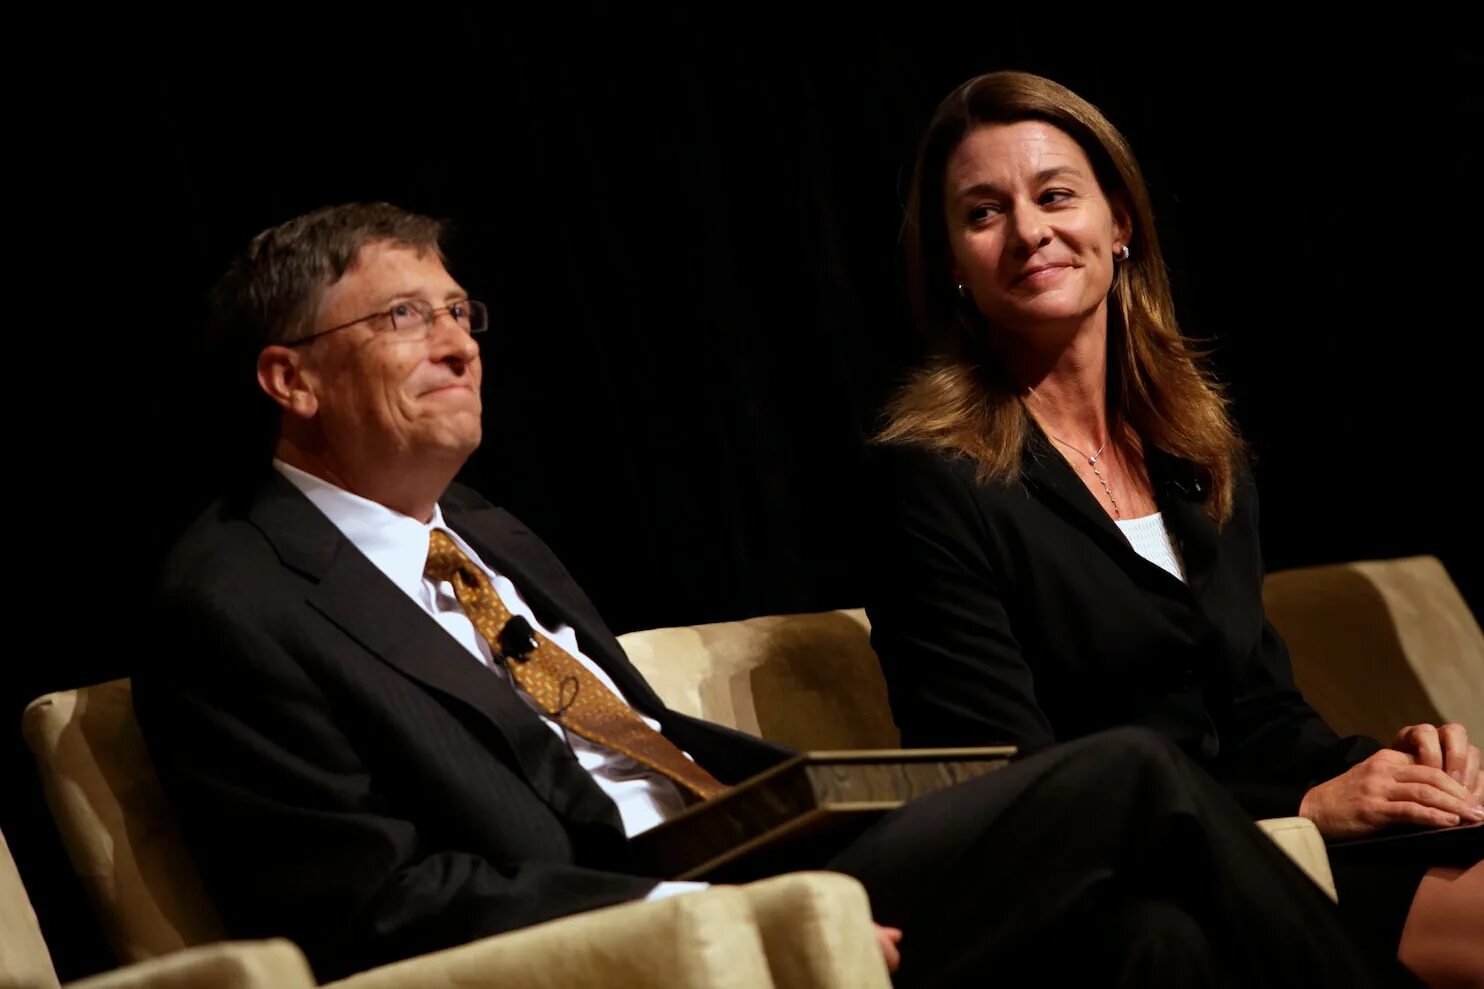 Фонд билла и мелинды гейтс. Мелинда Гейтс. Билл Гейтс семья. Мелинда Гейтс в молодости. Билл и Мелинда Гейтс воз.